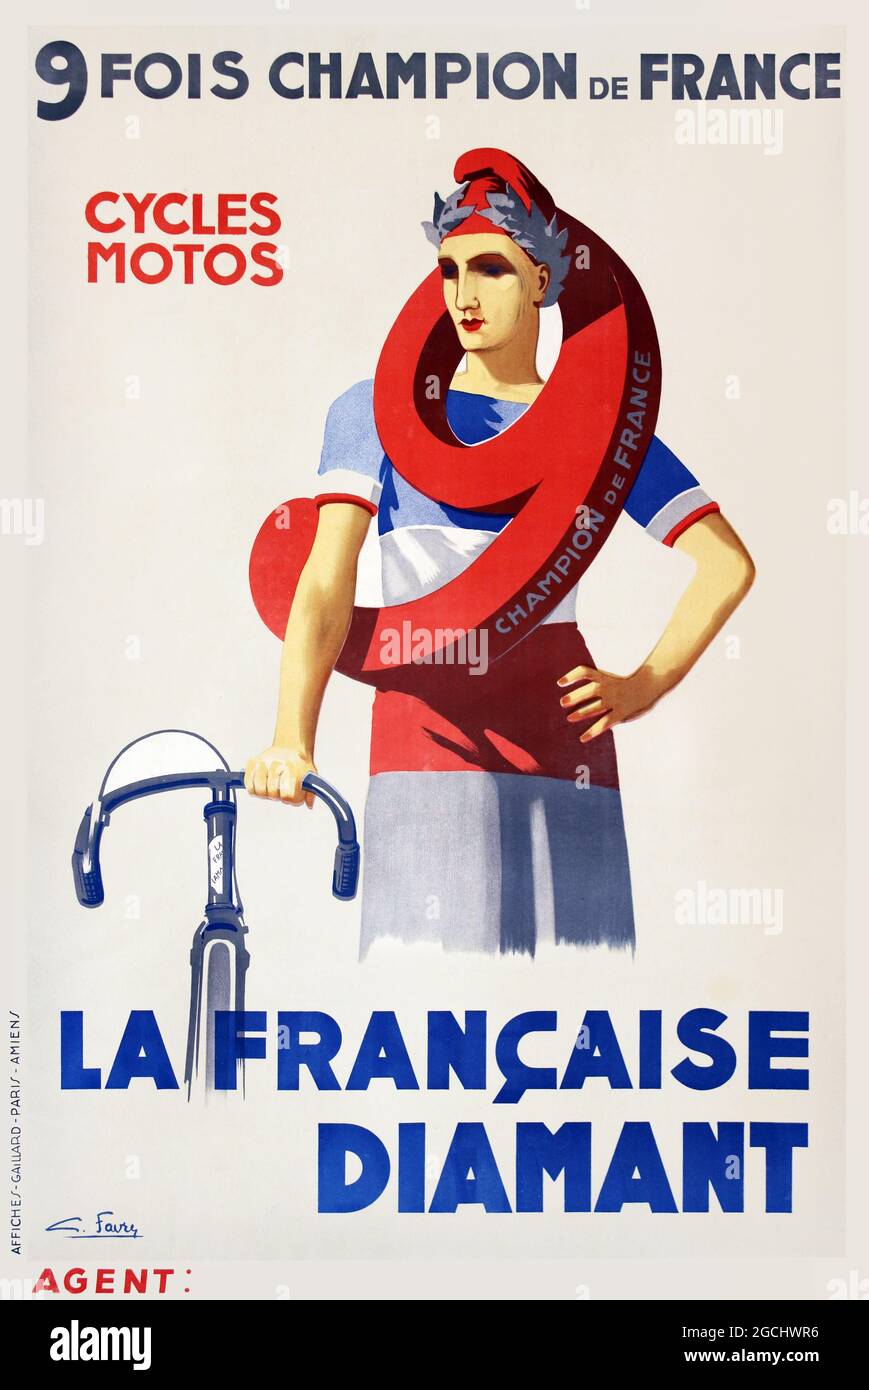 9 fois champion de France – Cycles Motos. La Francaise Diamant. Tour De France. Bicycle poster. Old and vintage. Digitally enhanced. Artist: Favre. Stock Photo